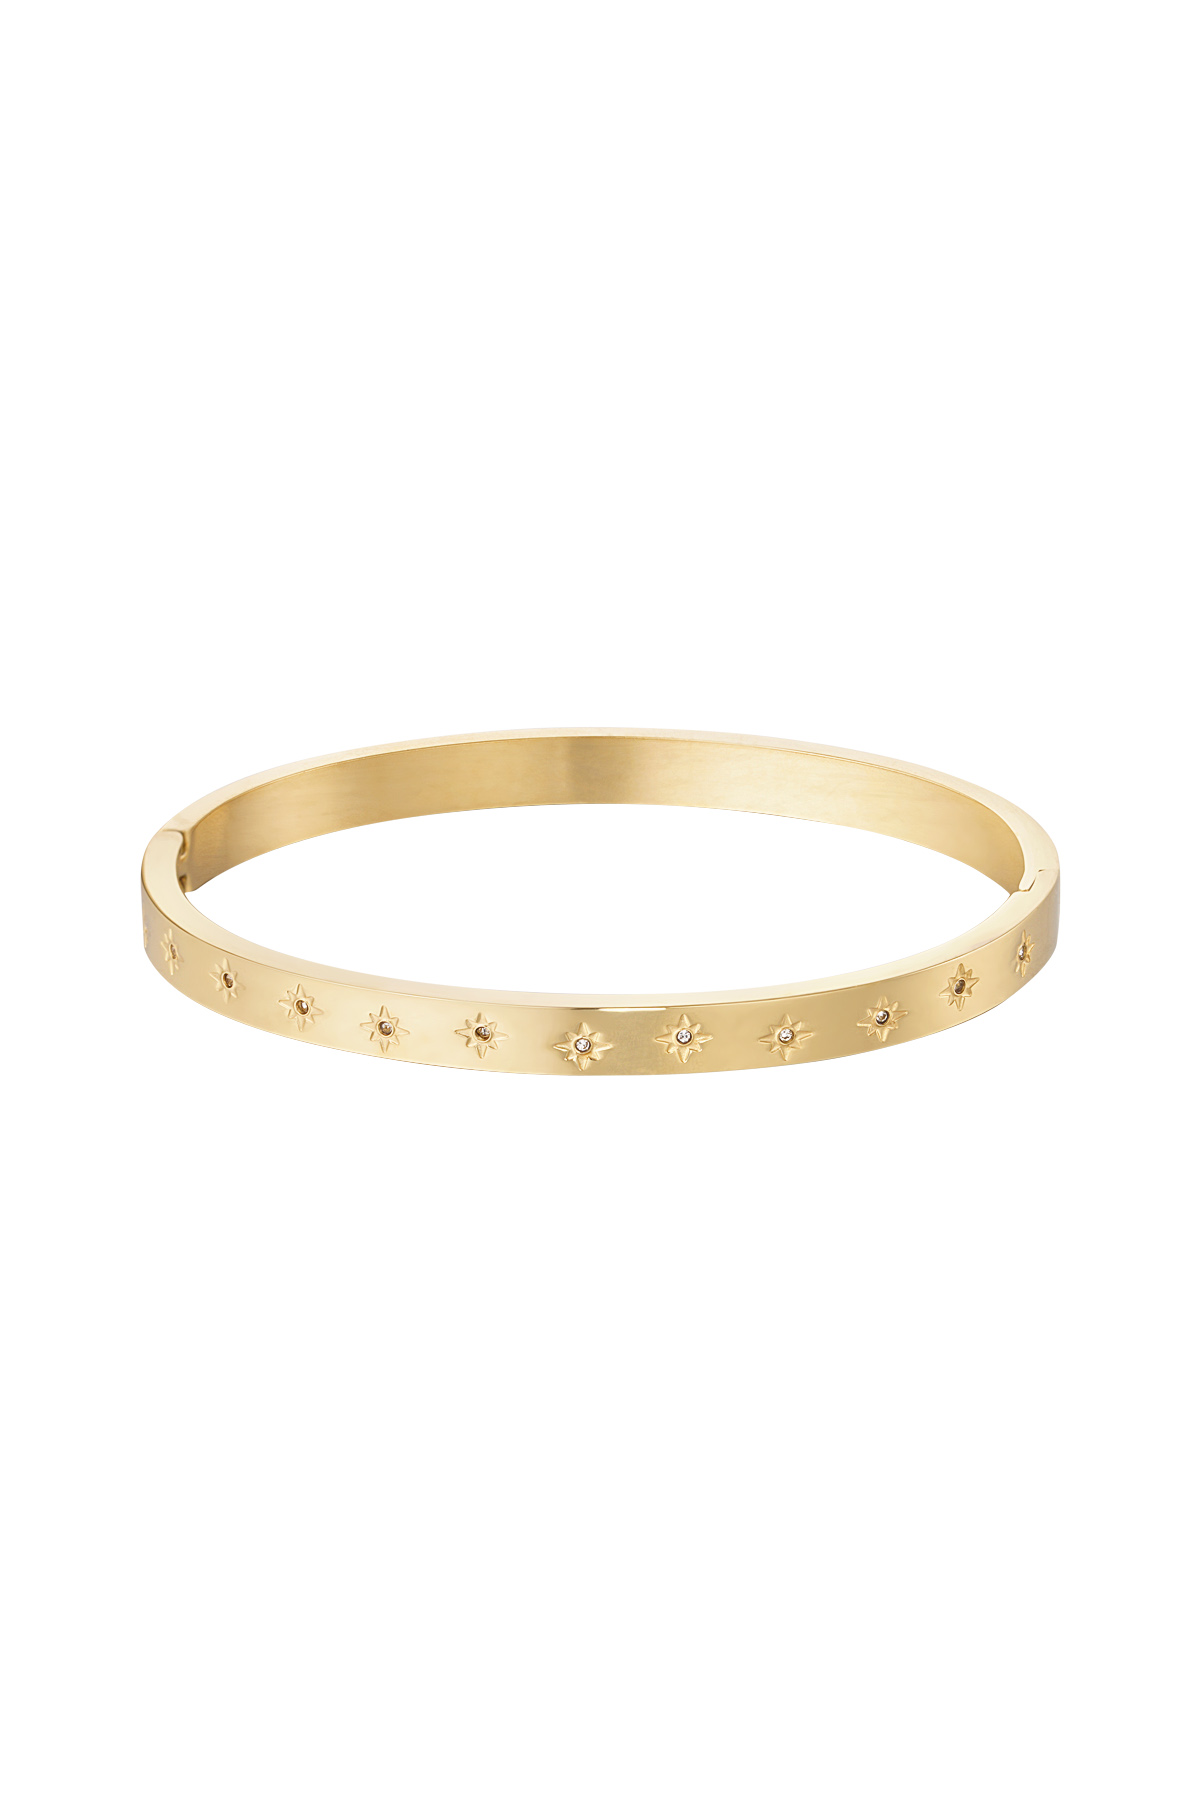 Slave bracelet stars - gold 